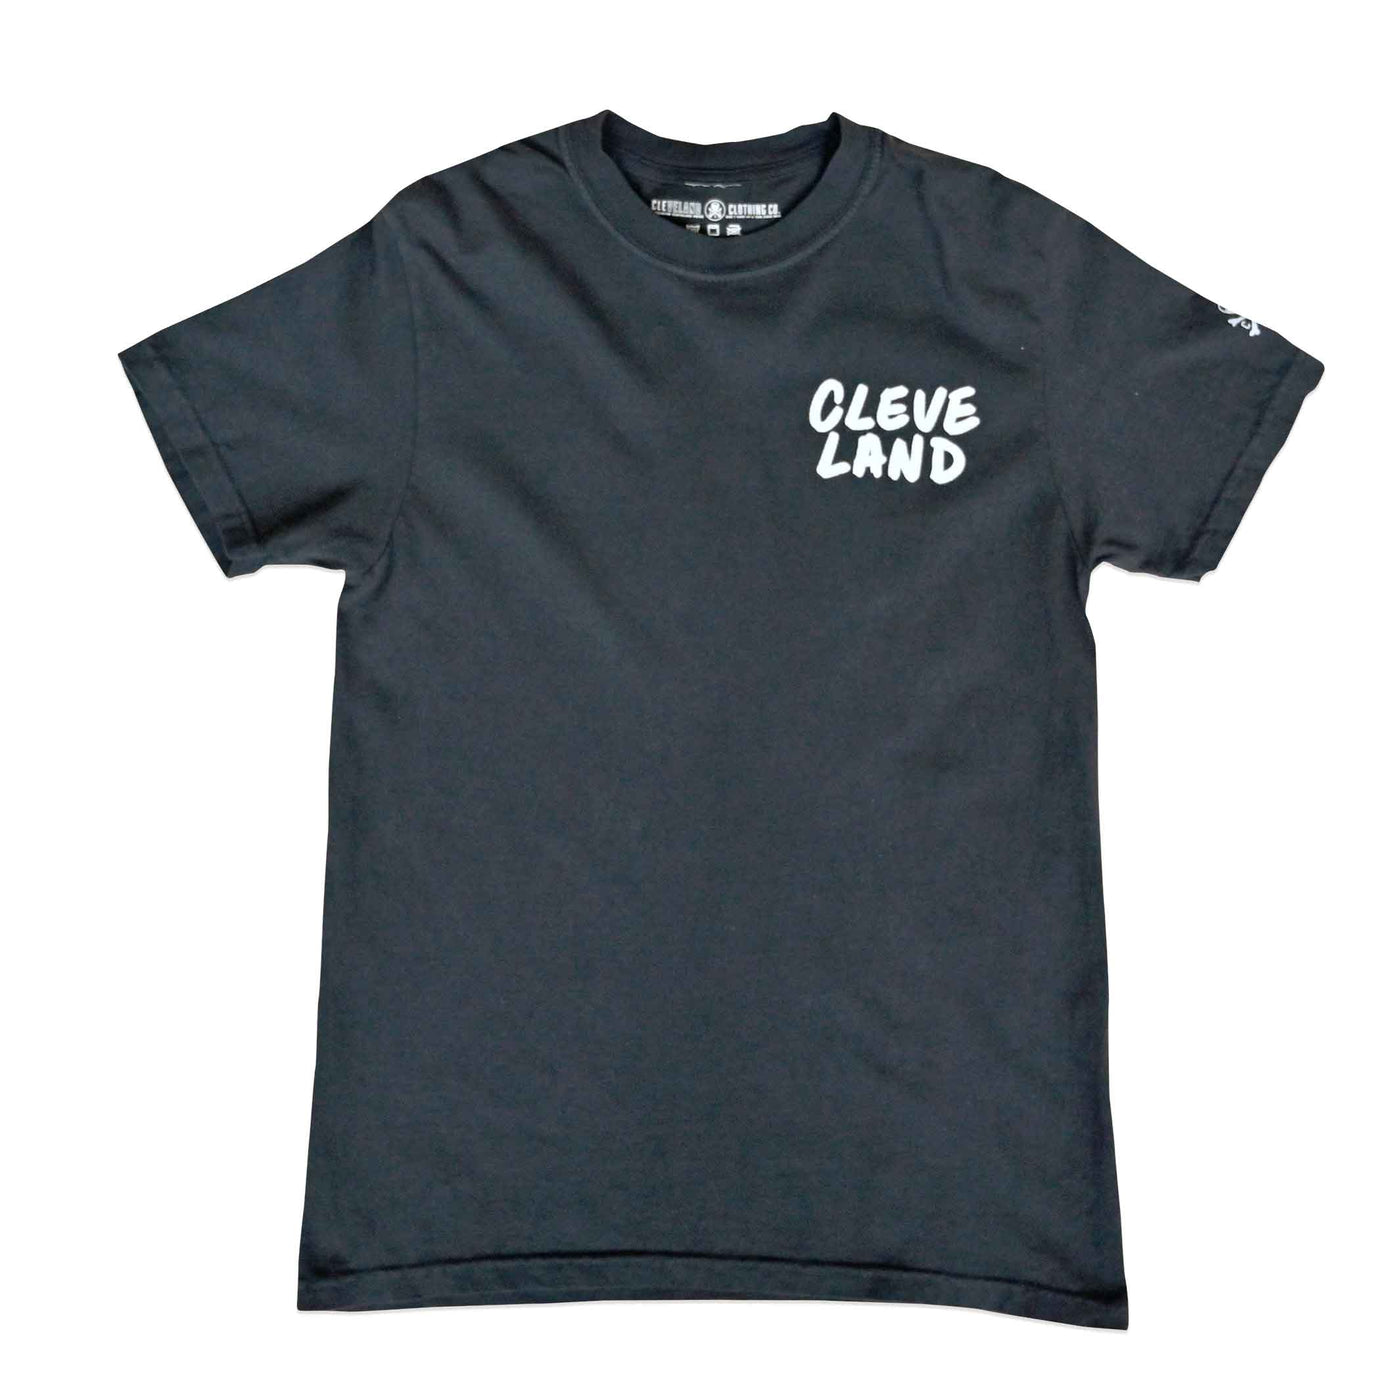 CLEVELAND/UNDERRATED - Unisex Crew T-Shirt